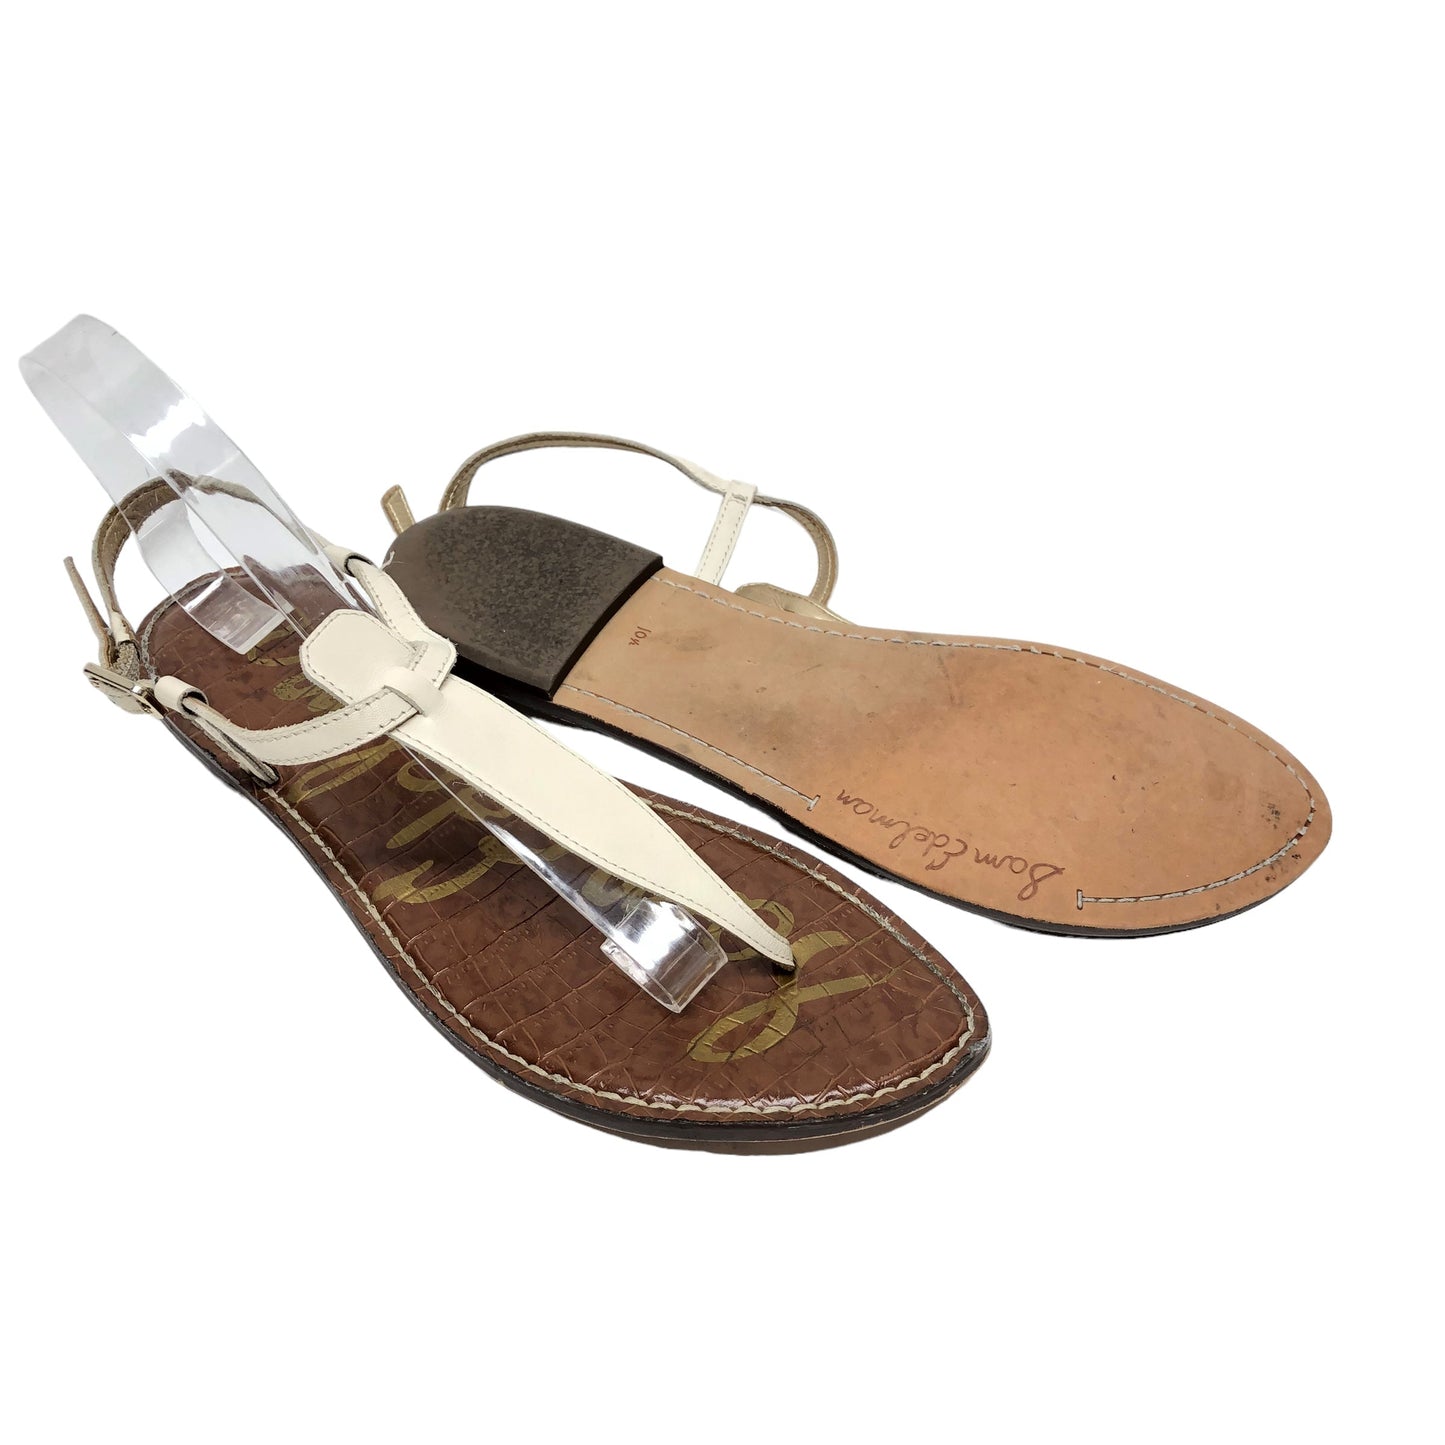 Sandals Flats By Sam Edelman  Size: 10.5